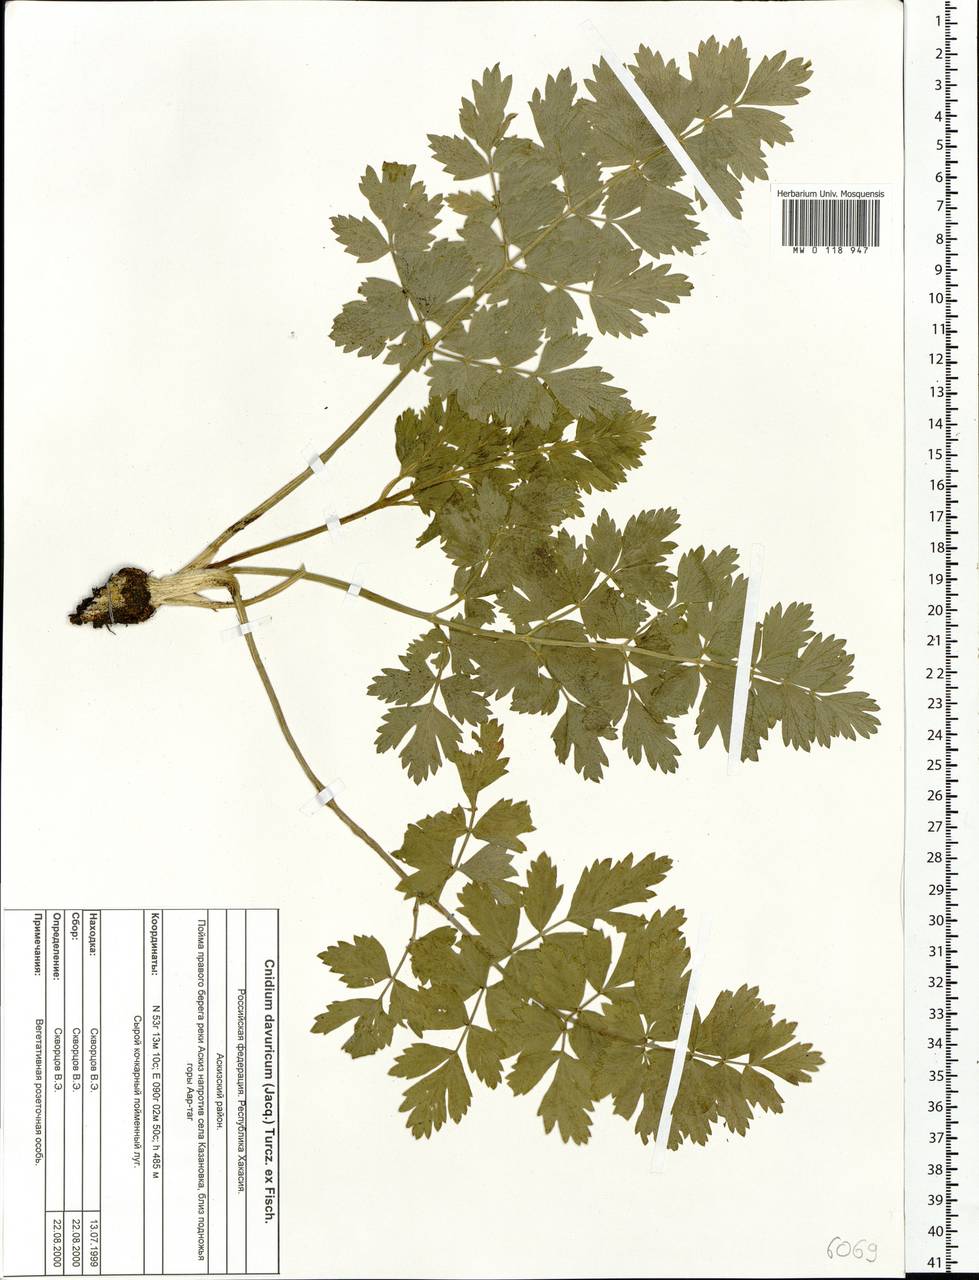 Cnidium dauricum (Jacq.) Turcz. ex Fisch. & C. A. Mey., Siberia, Altai & Sayany Mountains (S2) (Russia)